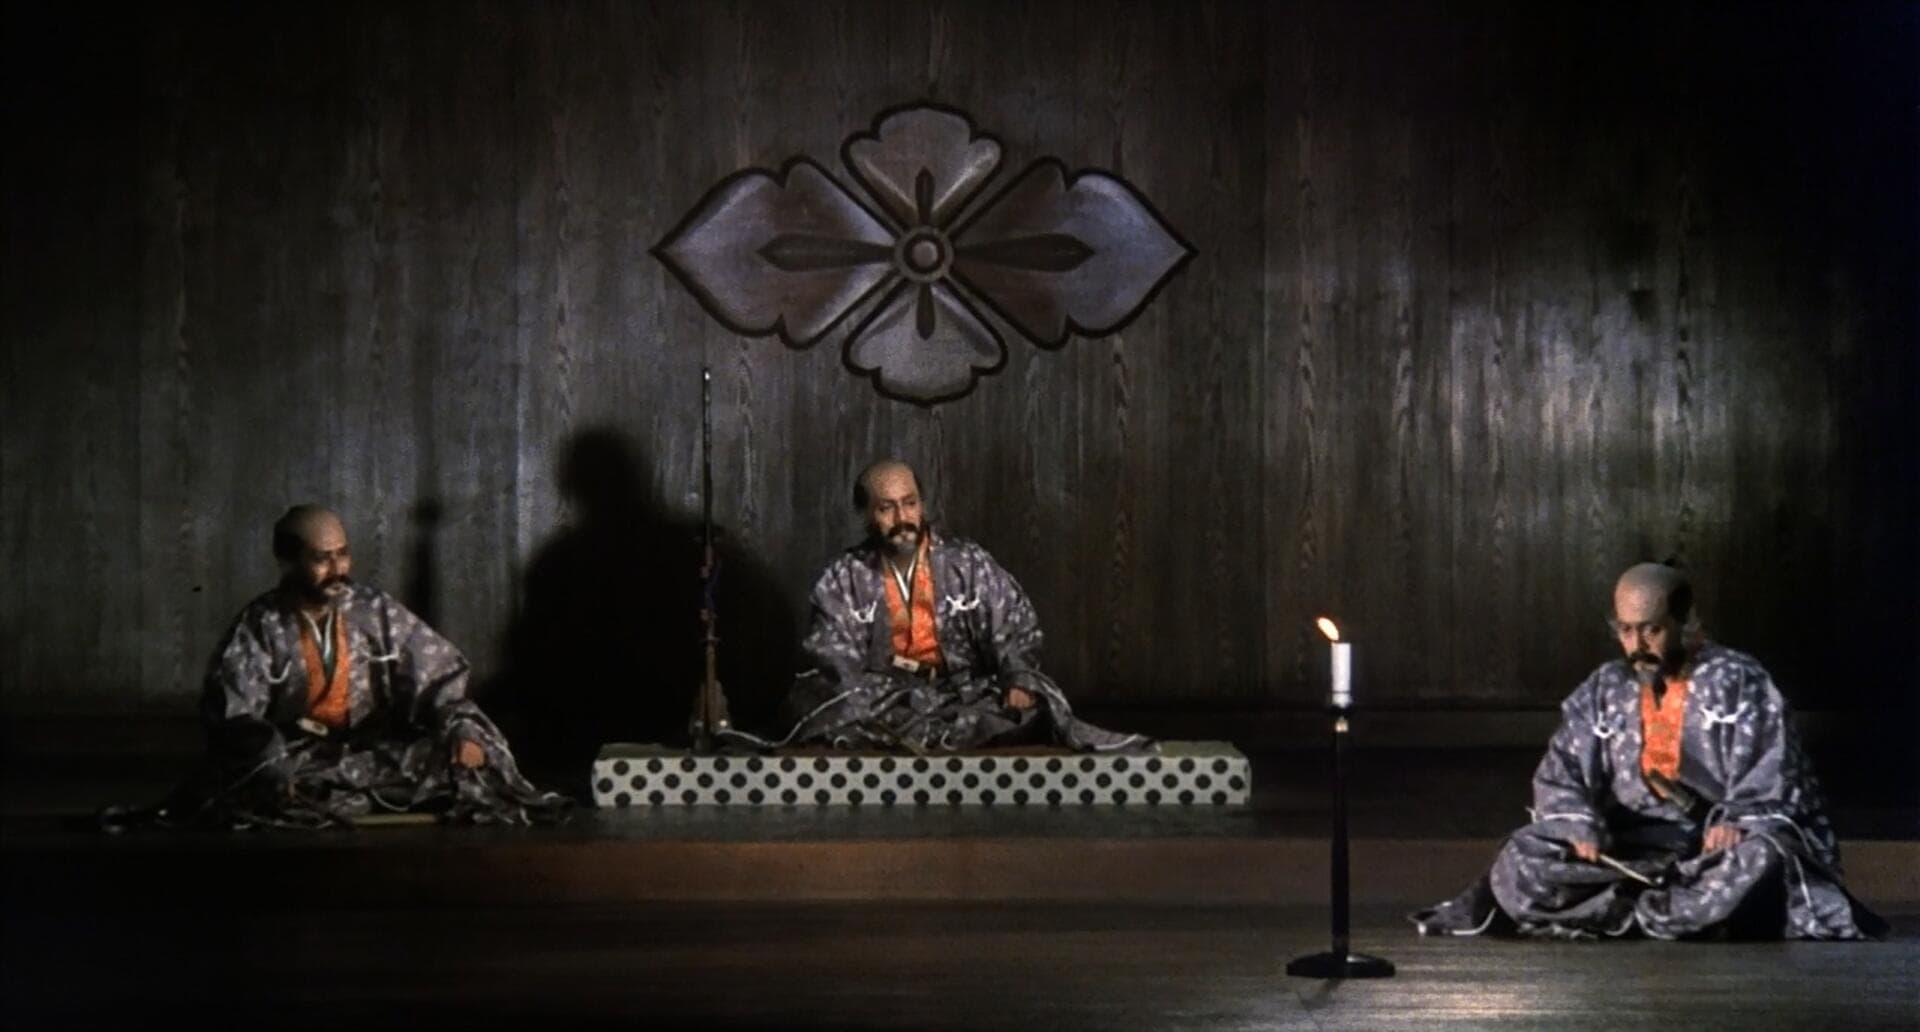 Kagemusha (1980) by Akira Kurosawa